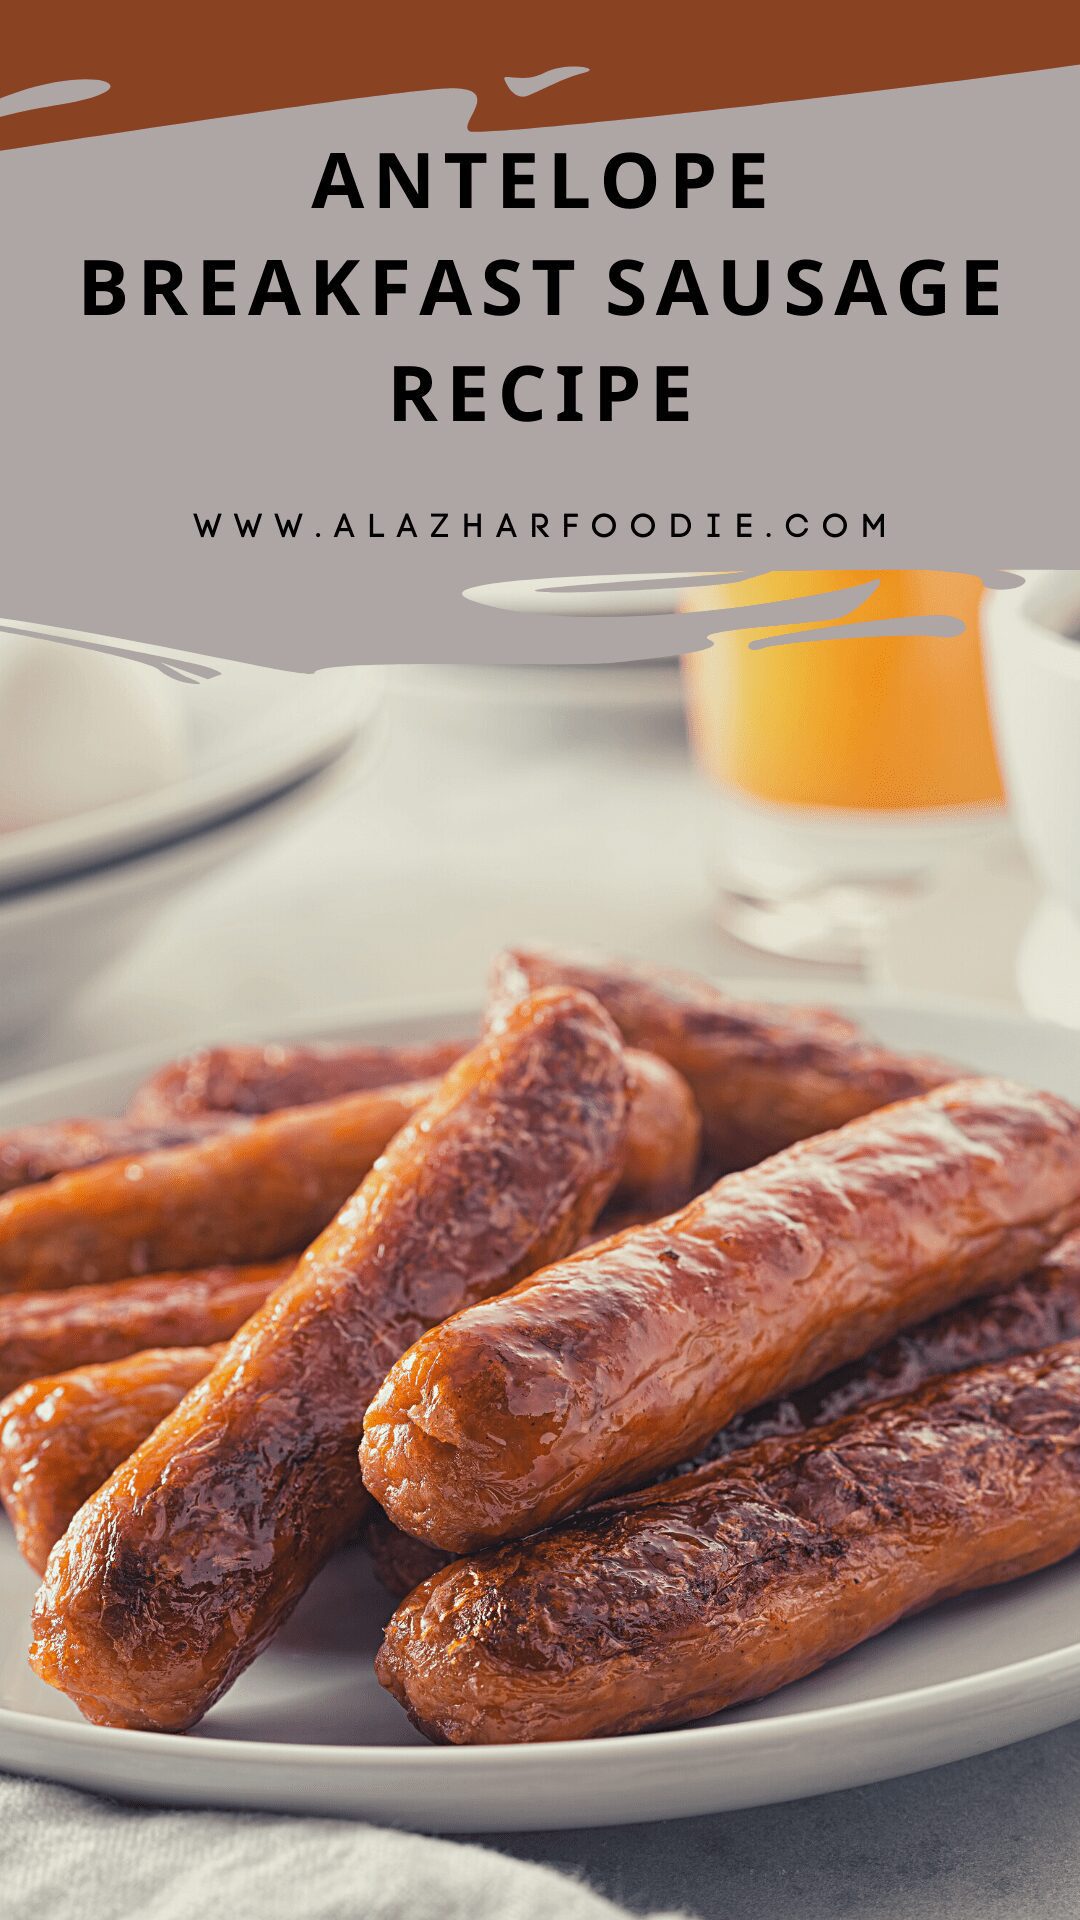 Antelope Breakfast Sausage Recipe